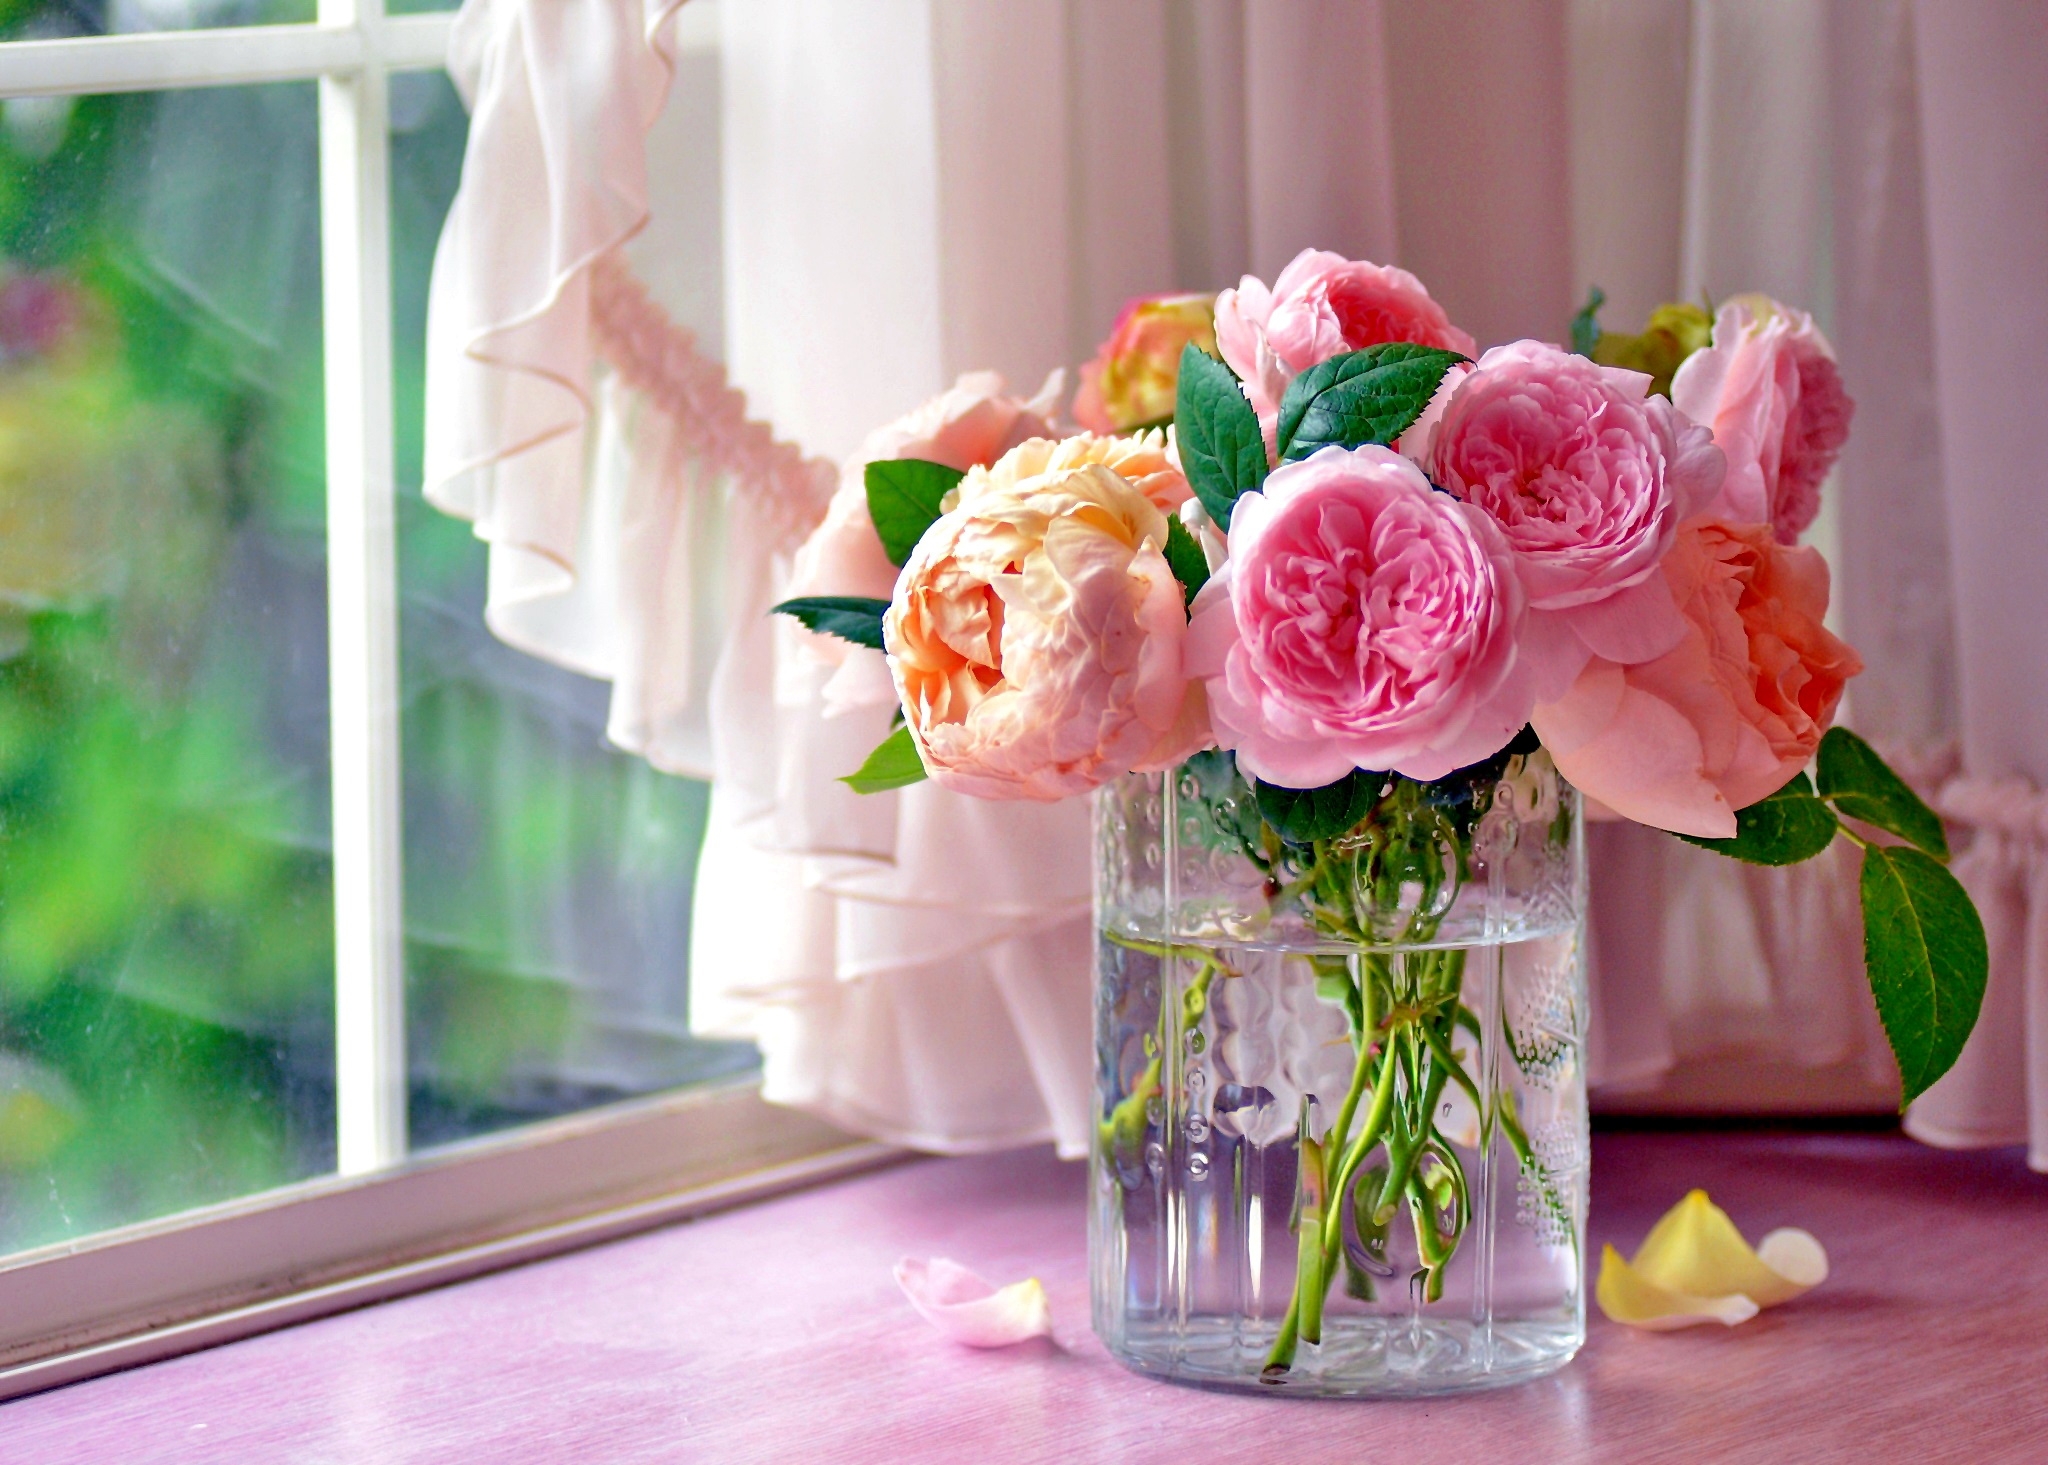 window, man made, flower, curtain, pink flower, rose, vase